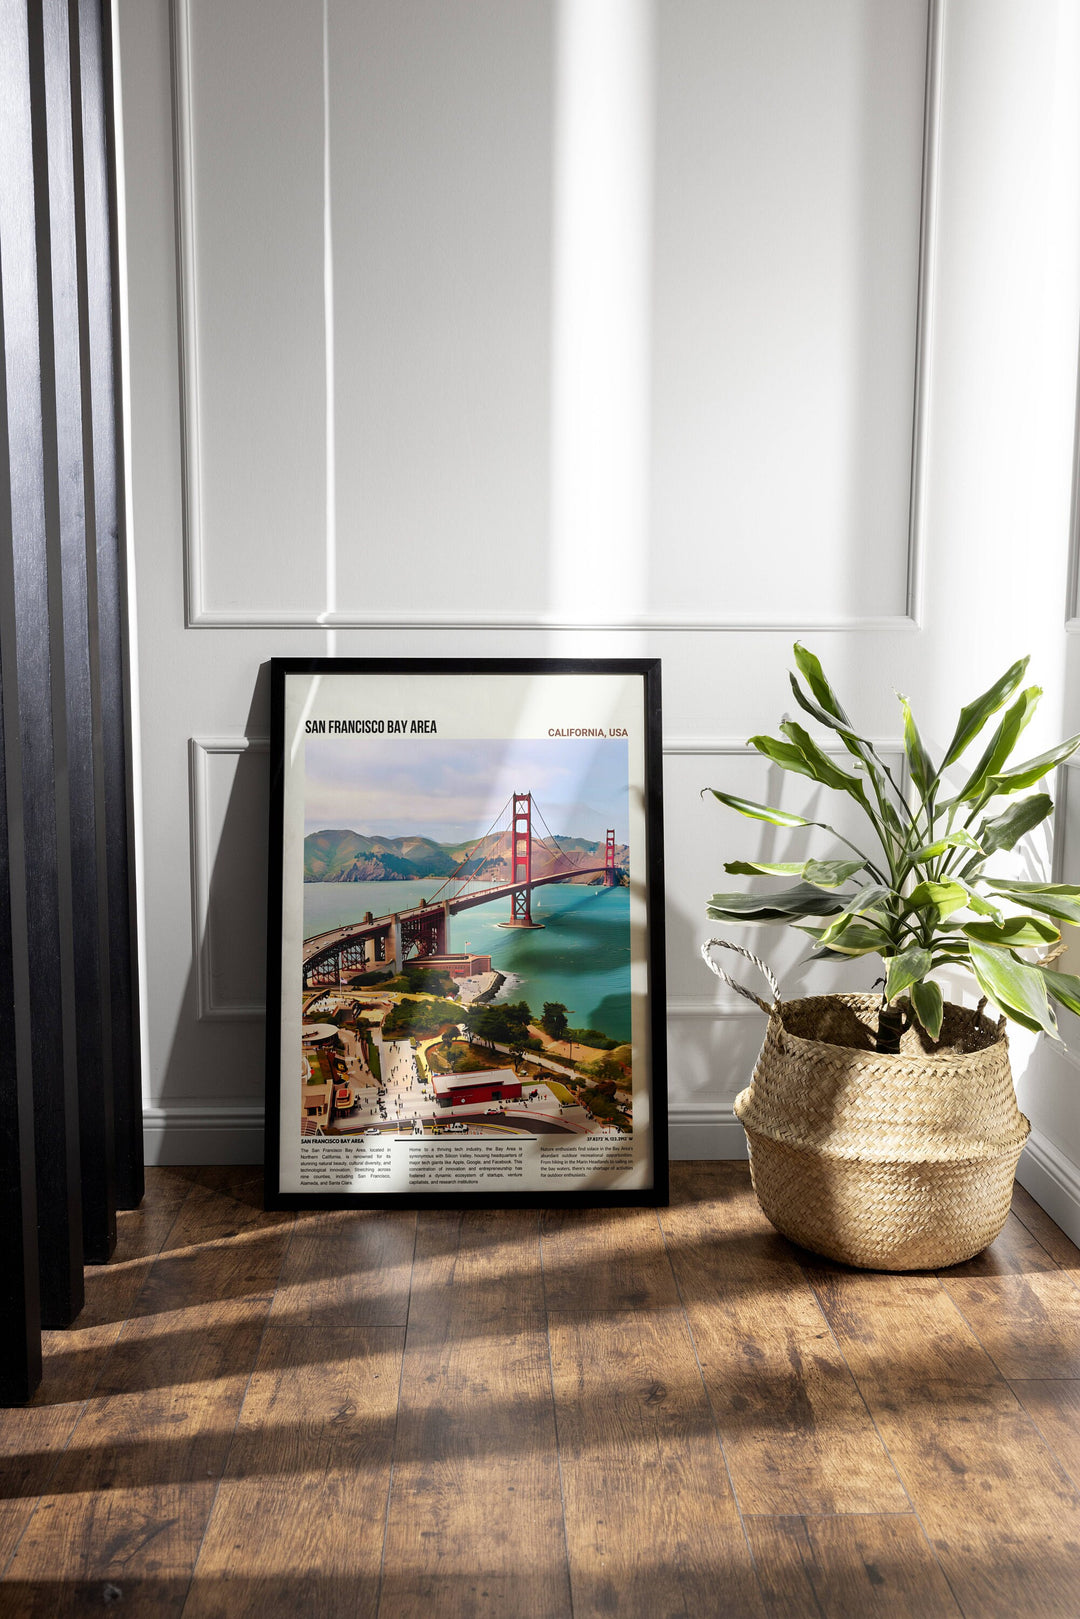 Stunning San Francisco Golden Gate Bridge artwork, showcasing the majesty of the Bay Area. Ideal decor for Bay Area aficionados.